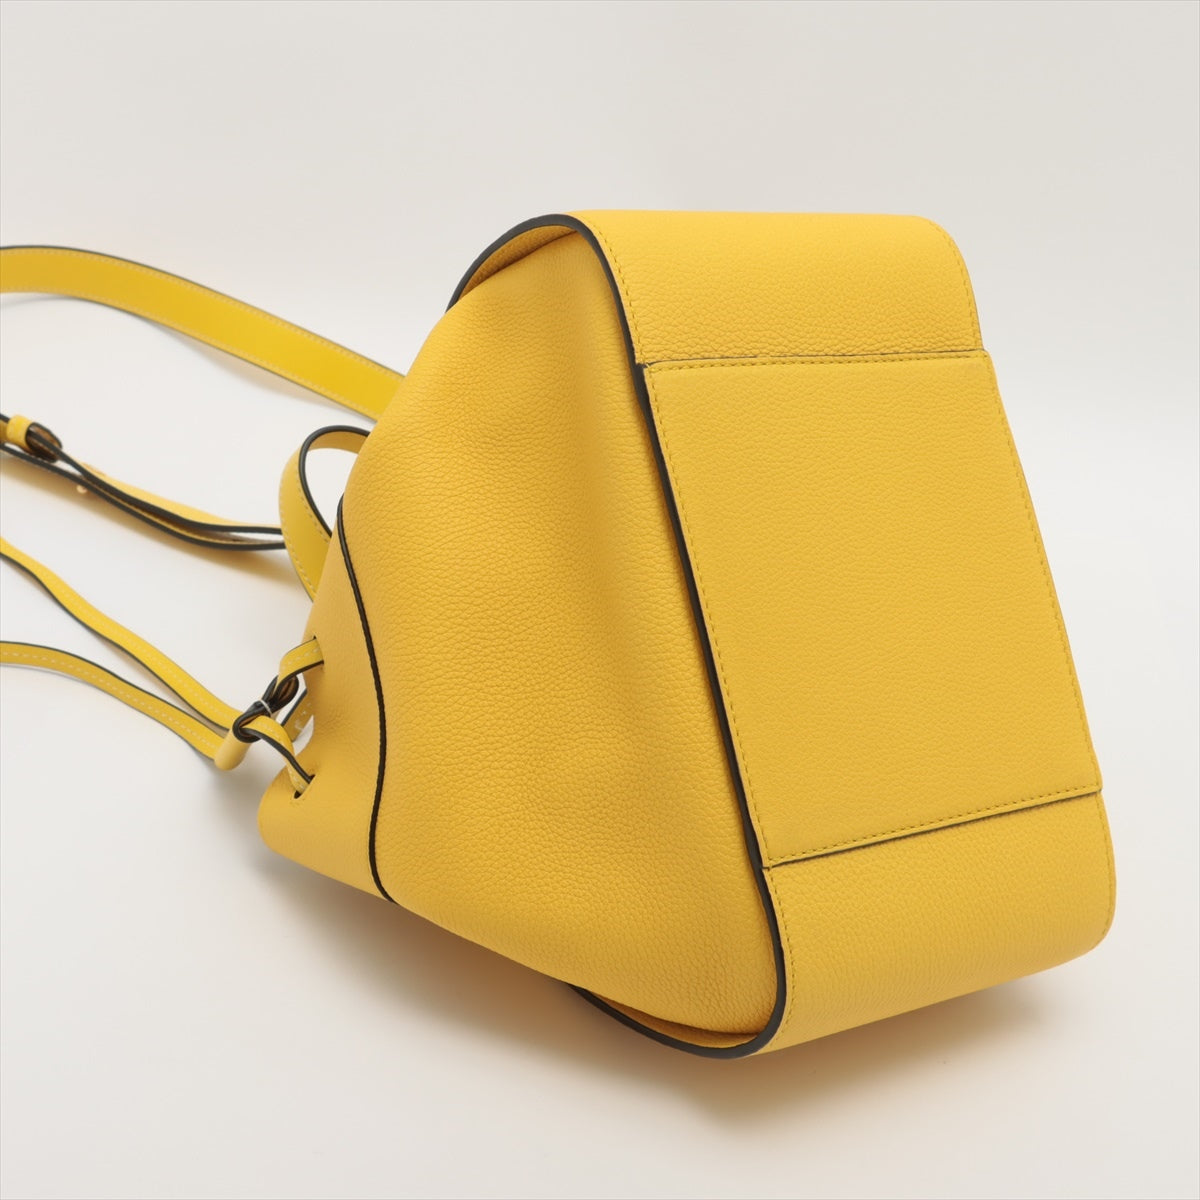 Loewe Hammock Small Leather 2 Way Handbag Yellow